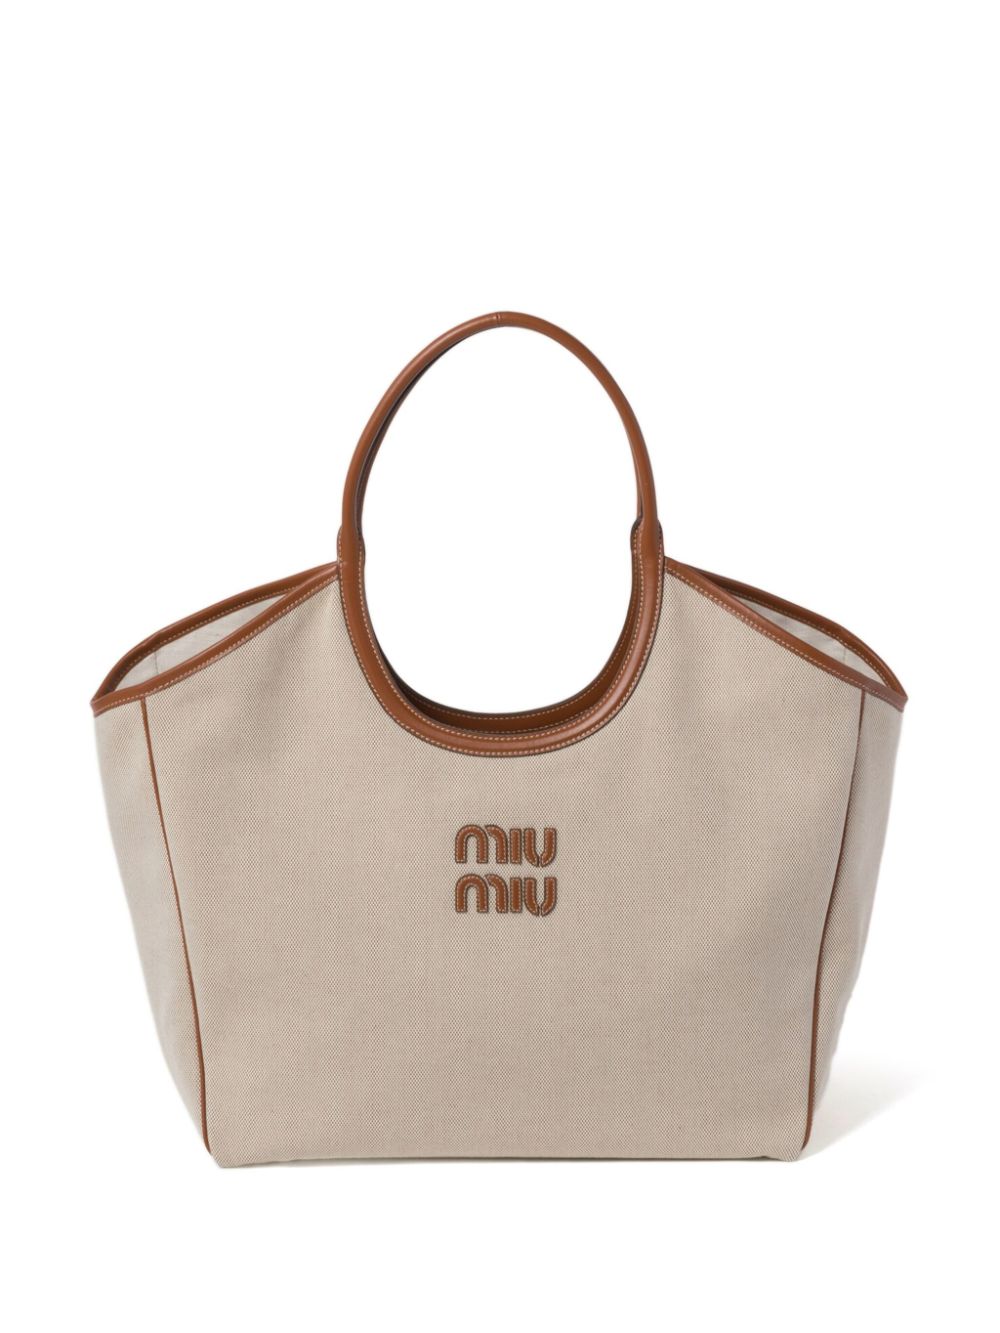 Miu Miu Ivy Tote Bag